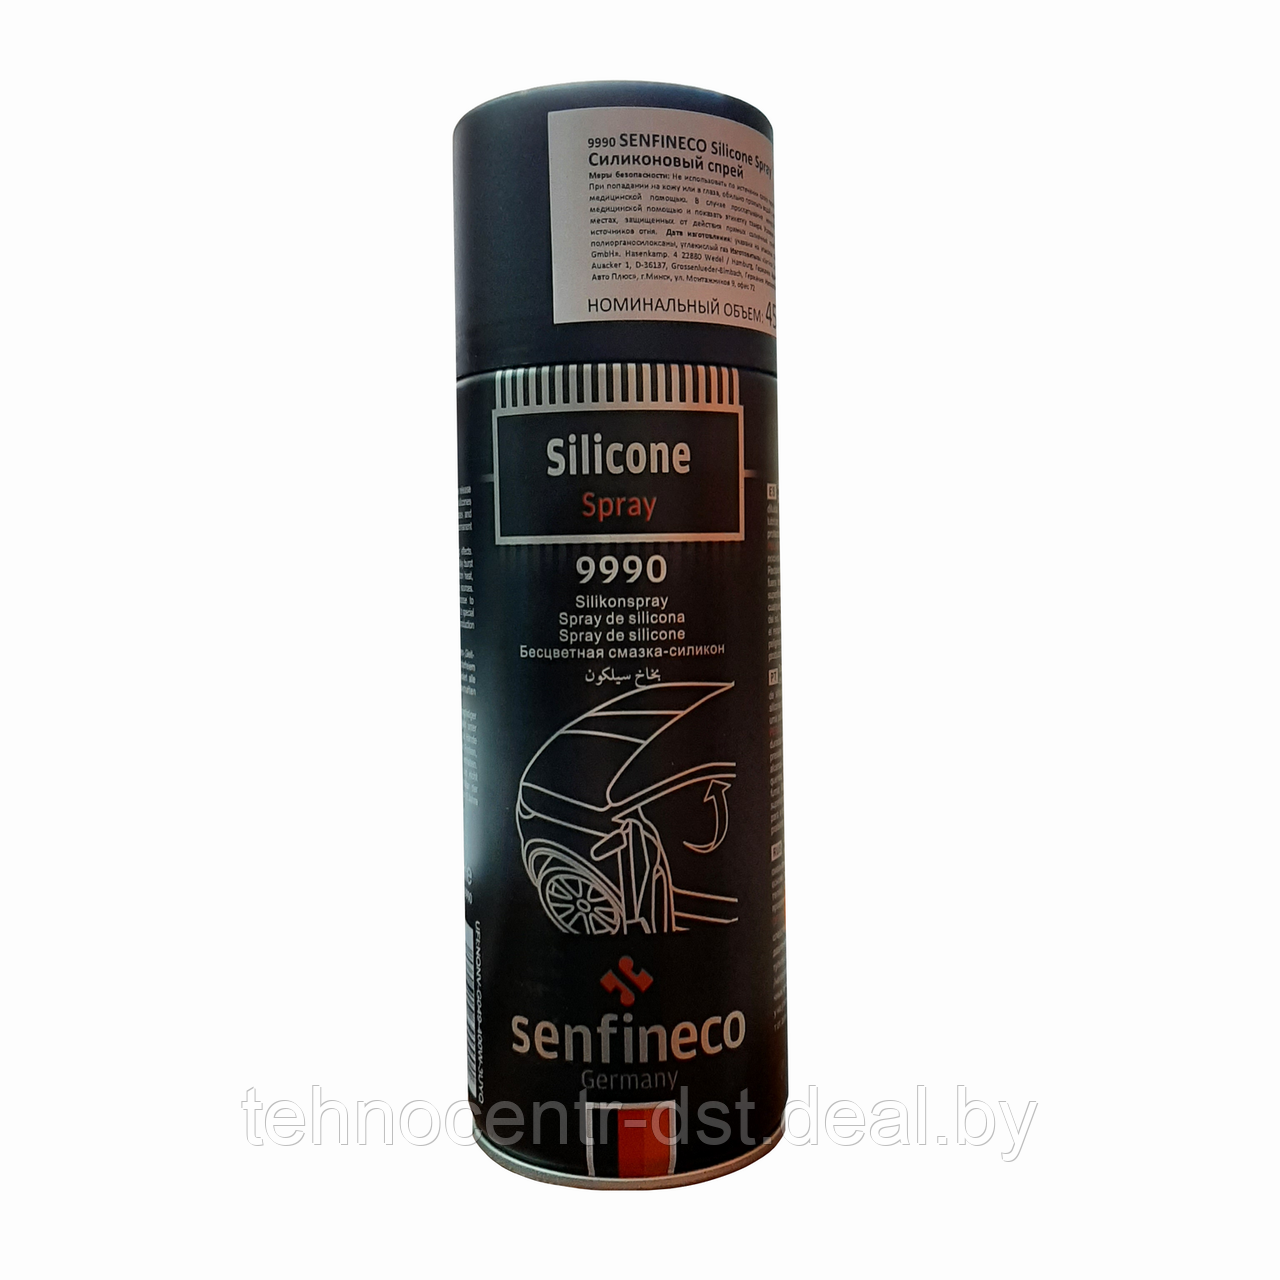 Бесцветная смазка-силикон спрей Senfineko Silicone Spray 9990 (450 мл)